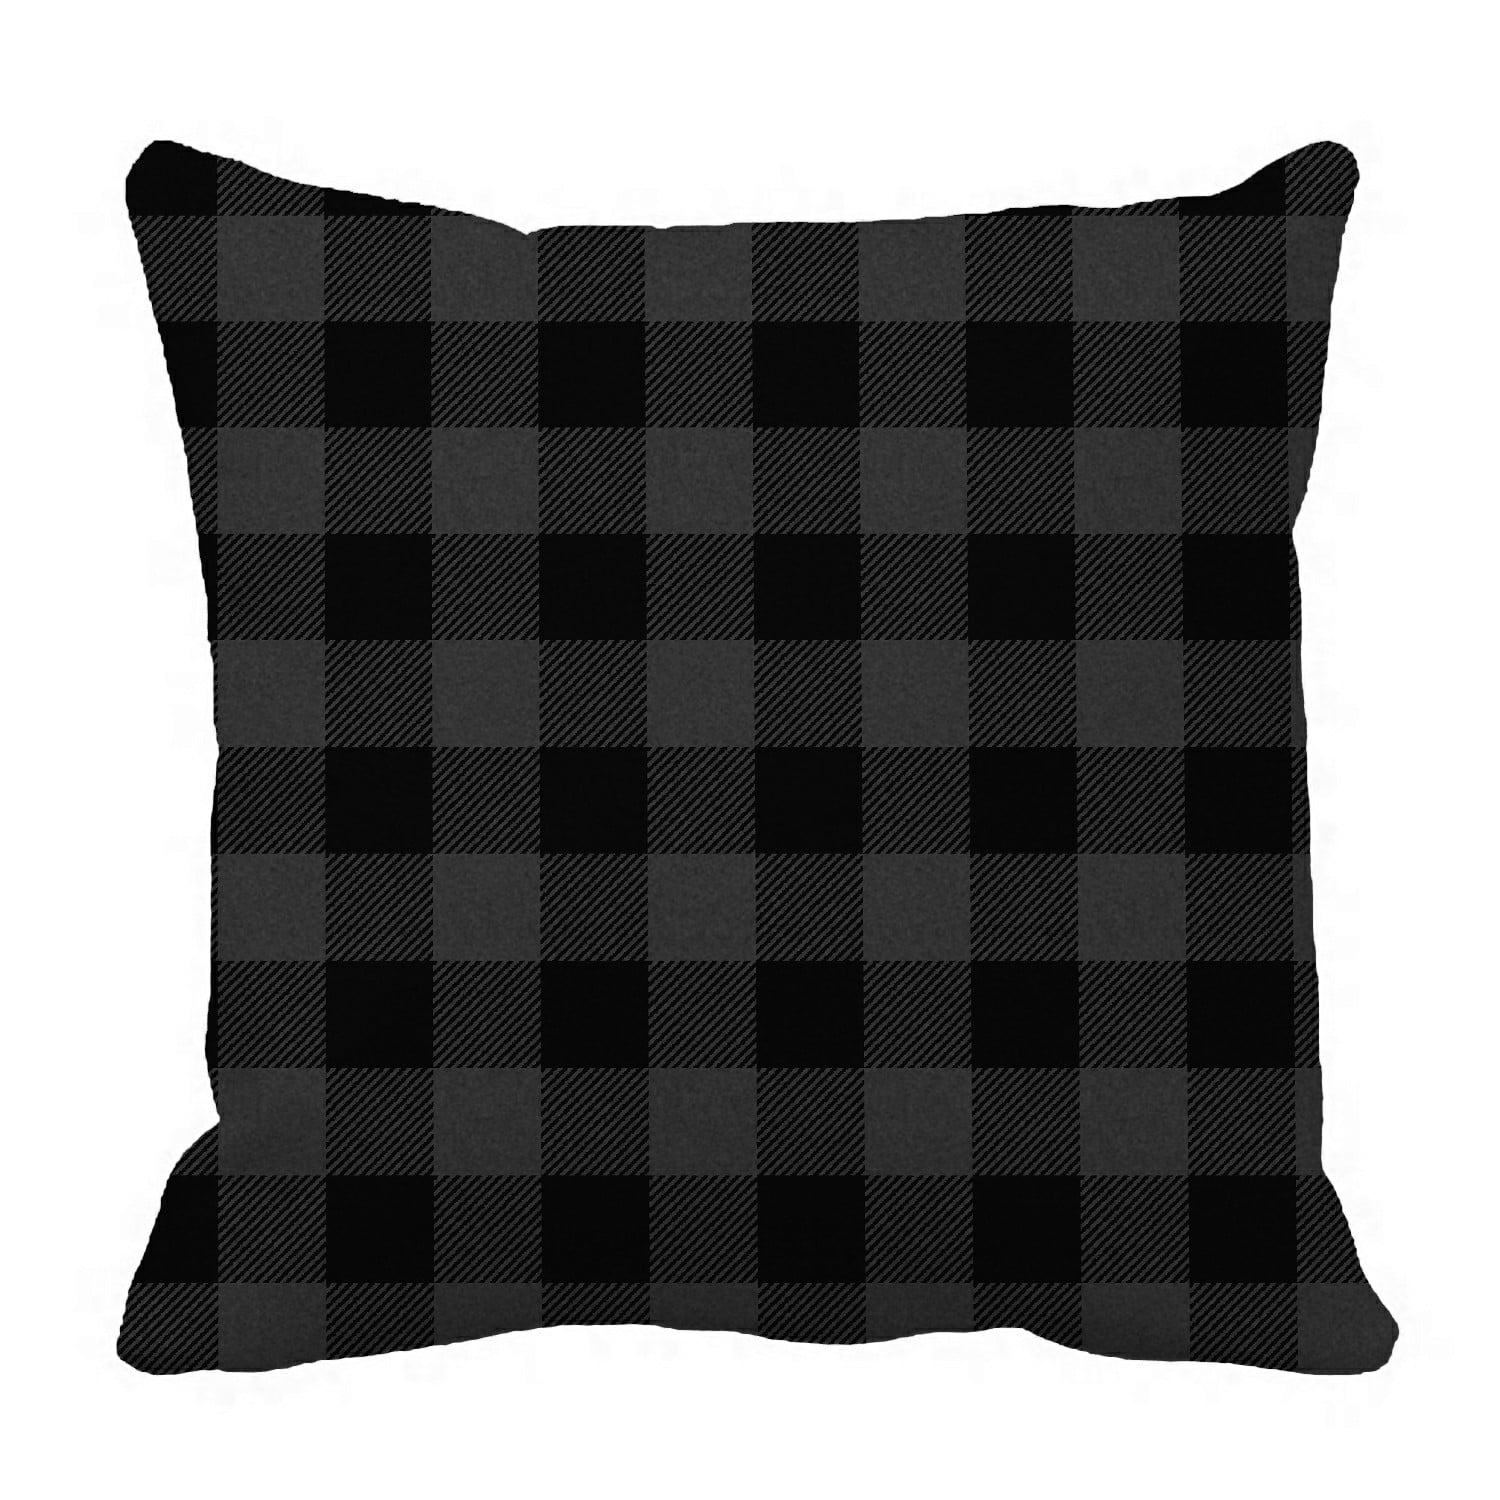 grey buffalo plaid pillows